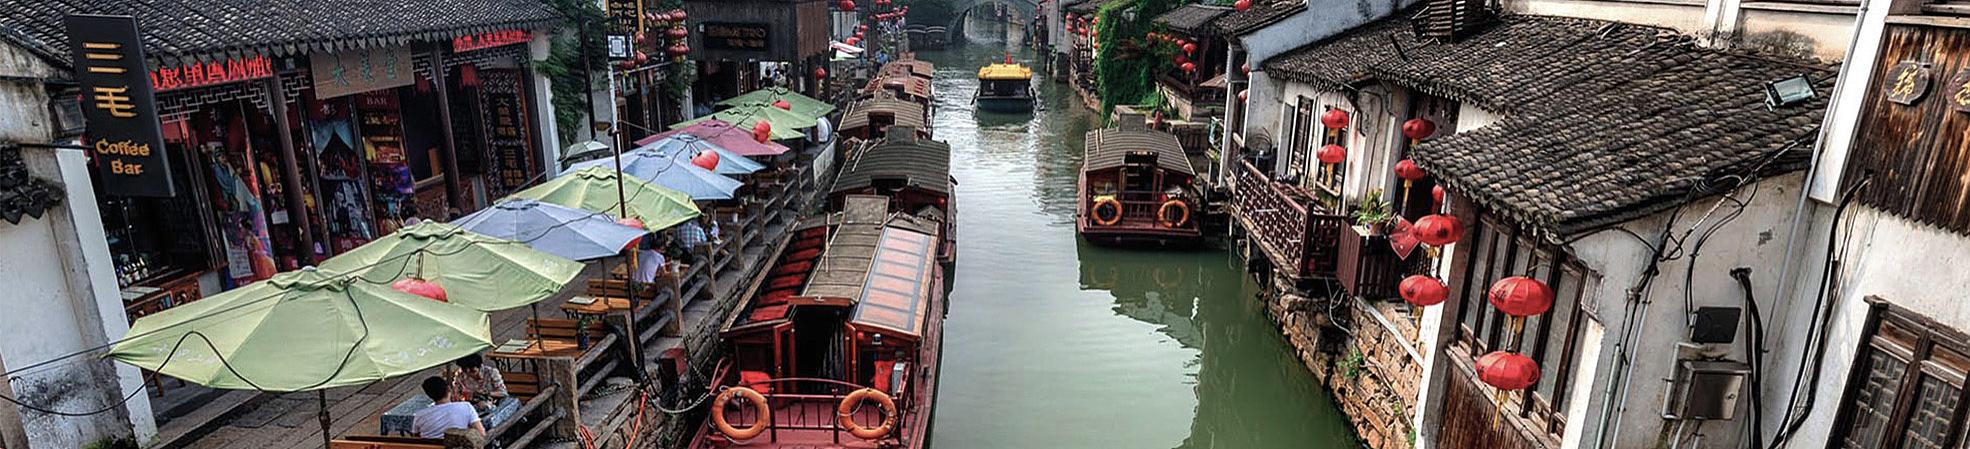 Suzhou Hotels - Accommodation